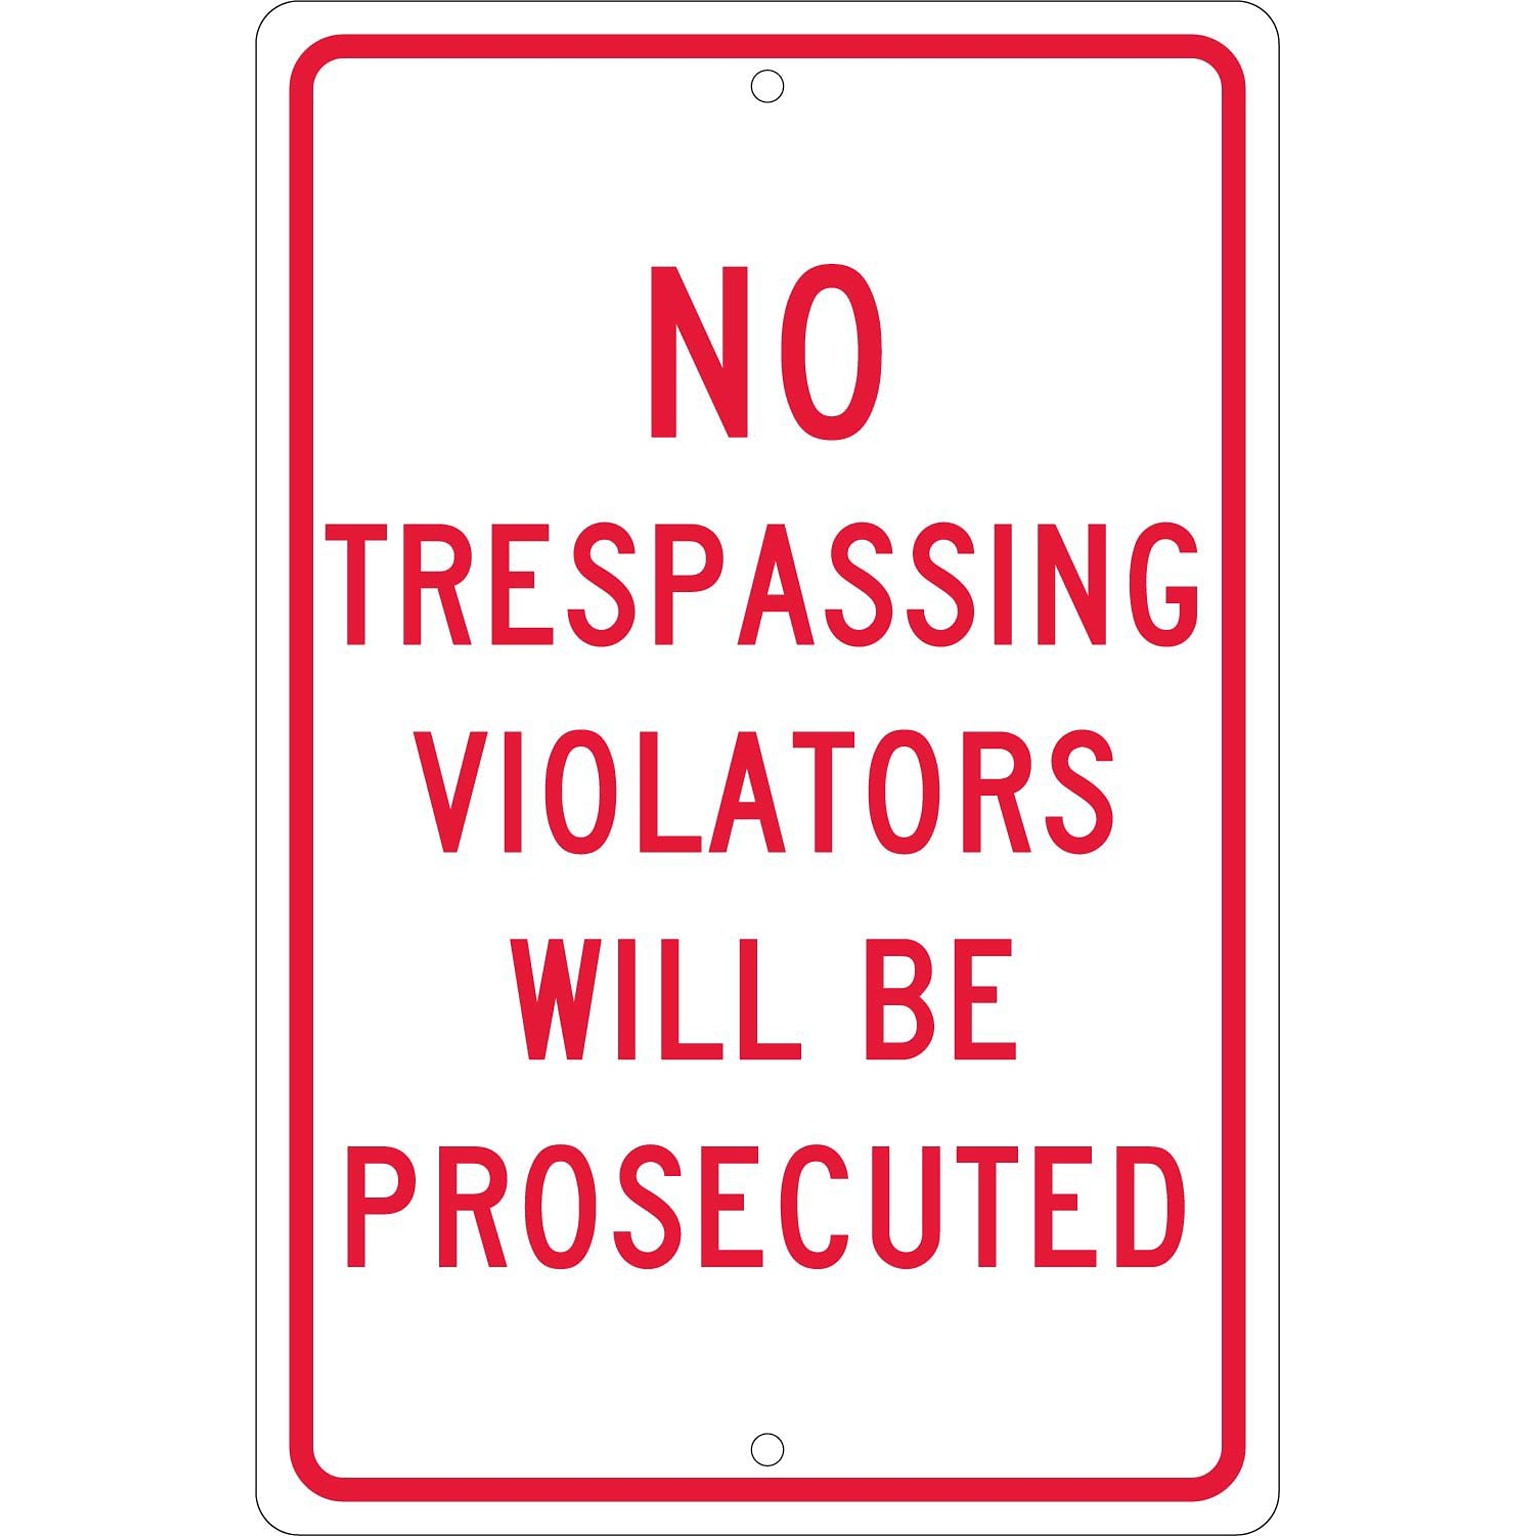 Traffic Warning Signs; No Trespassing Violators Will Be Prosecuted, 18X12, .063 Aluminum